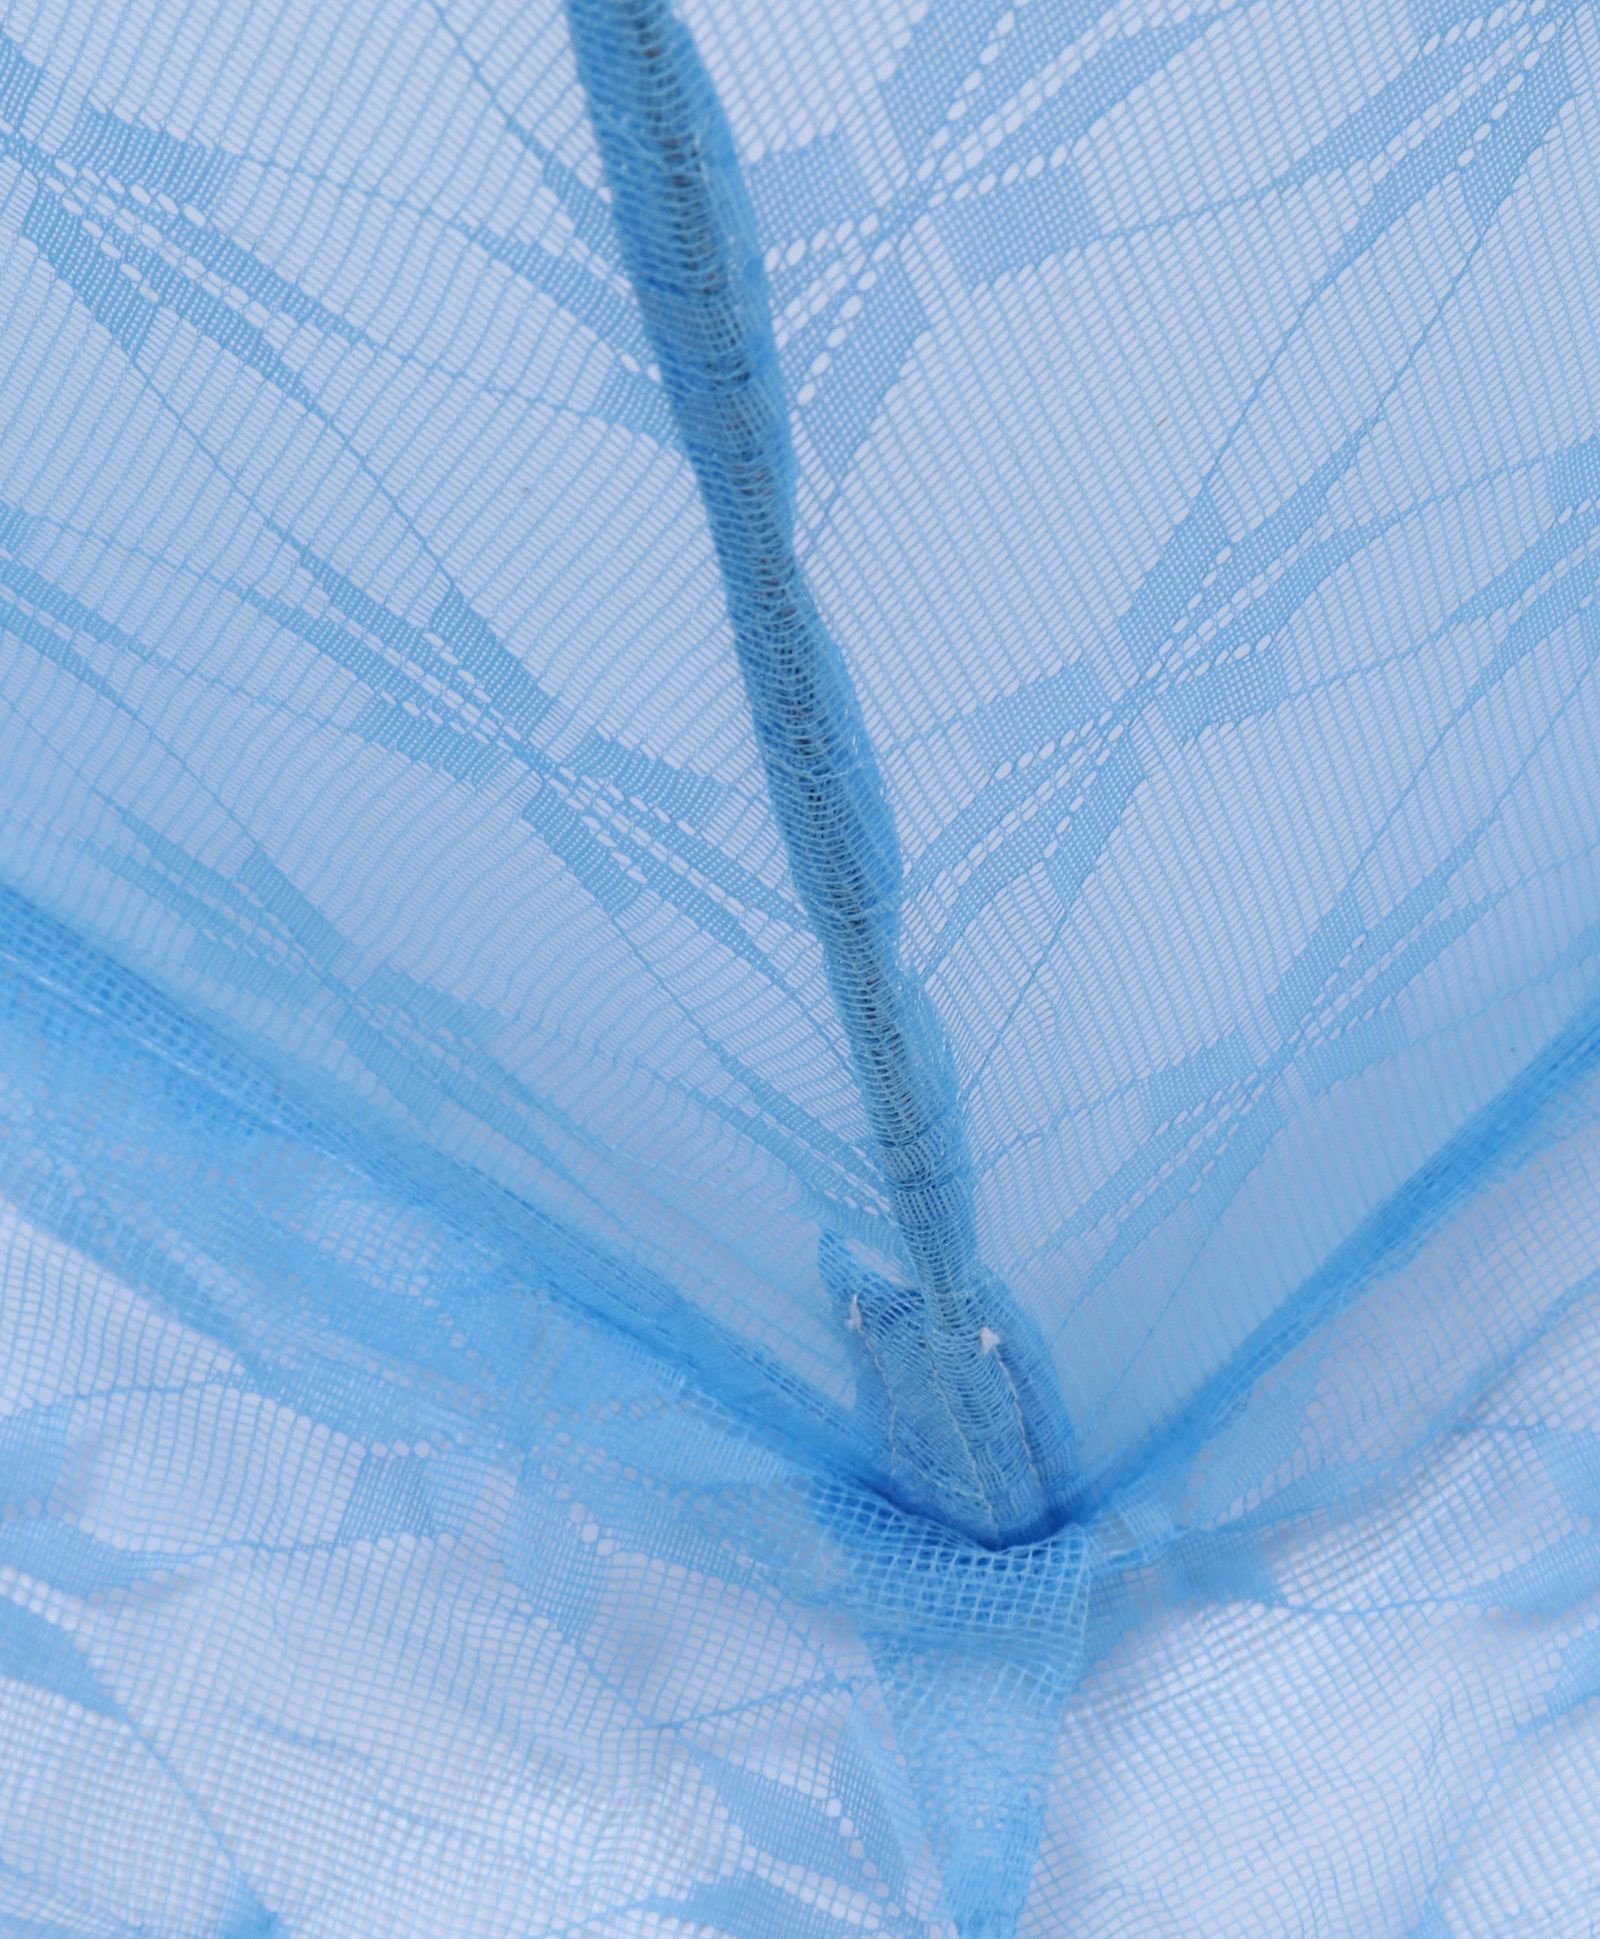 baby mosquito umbrella net - blue - small